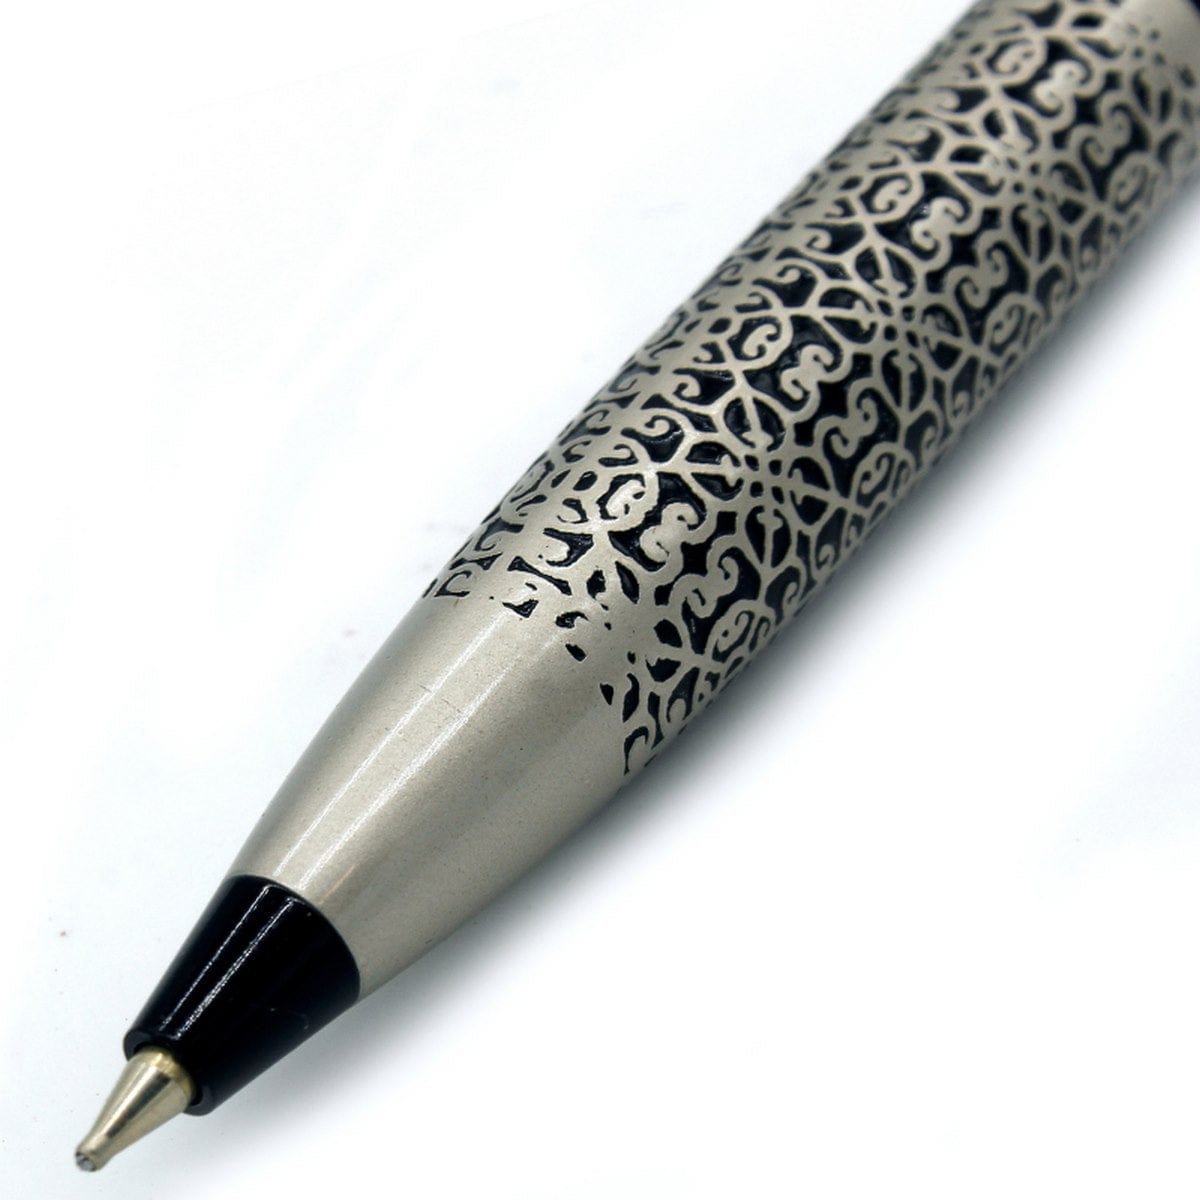 jags-mumbai Feather Pens Feather Ball Pen Design Meta Silver